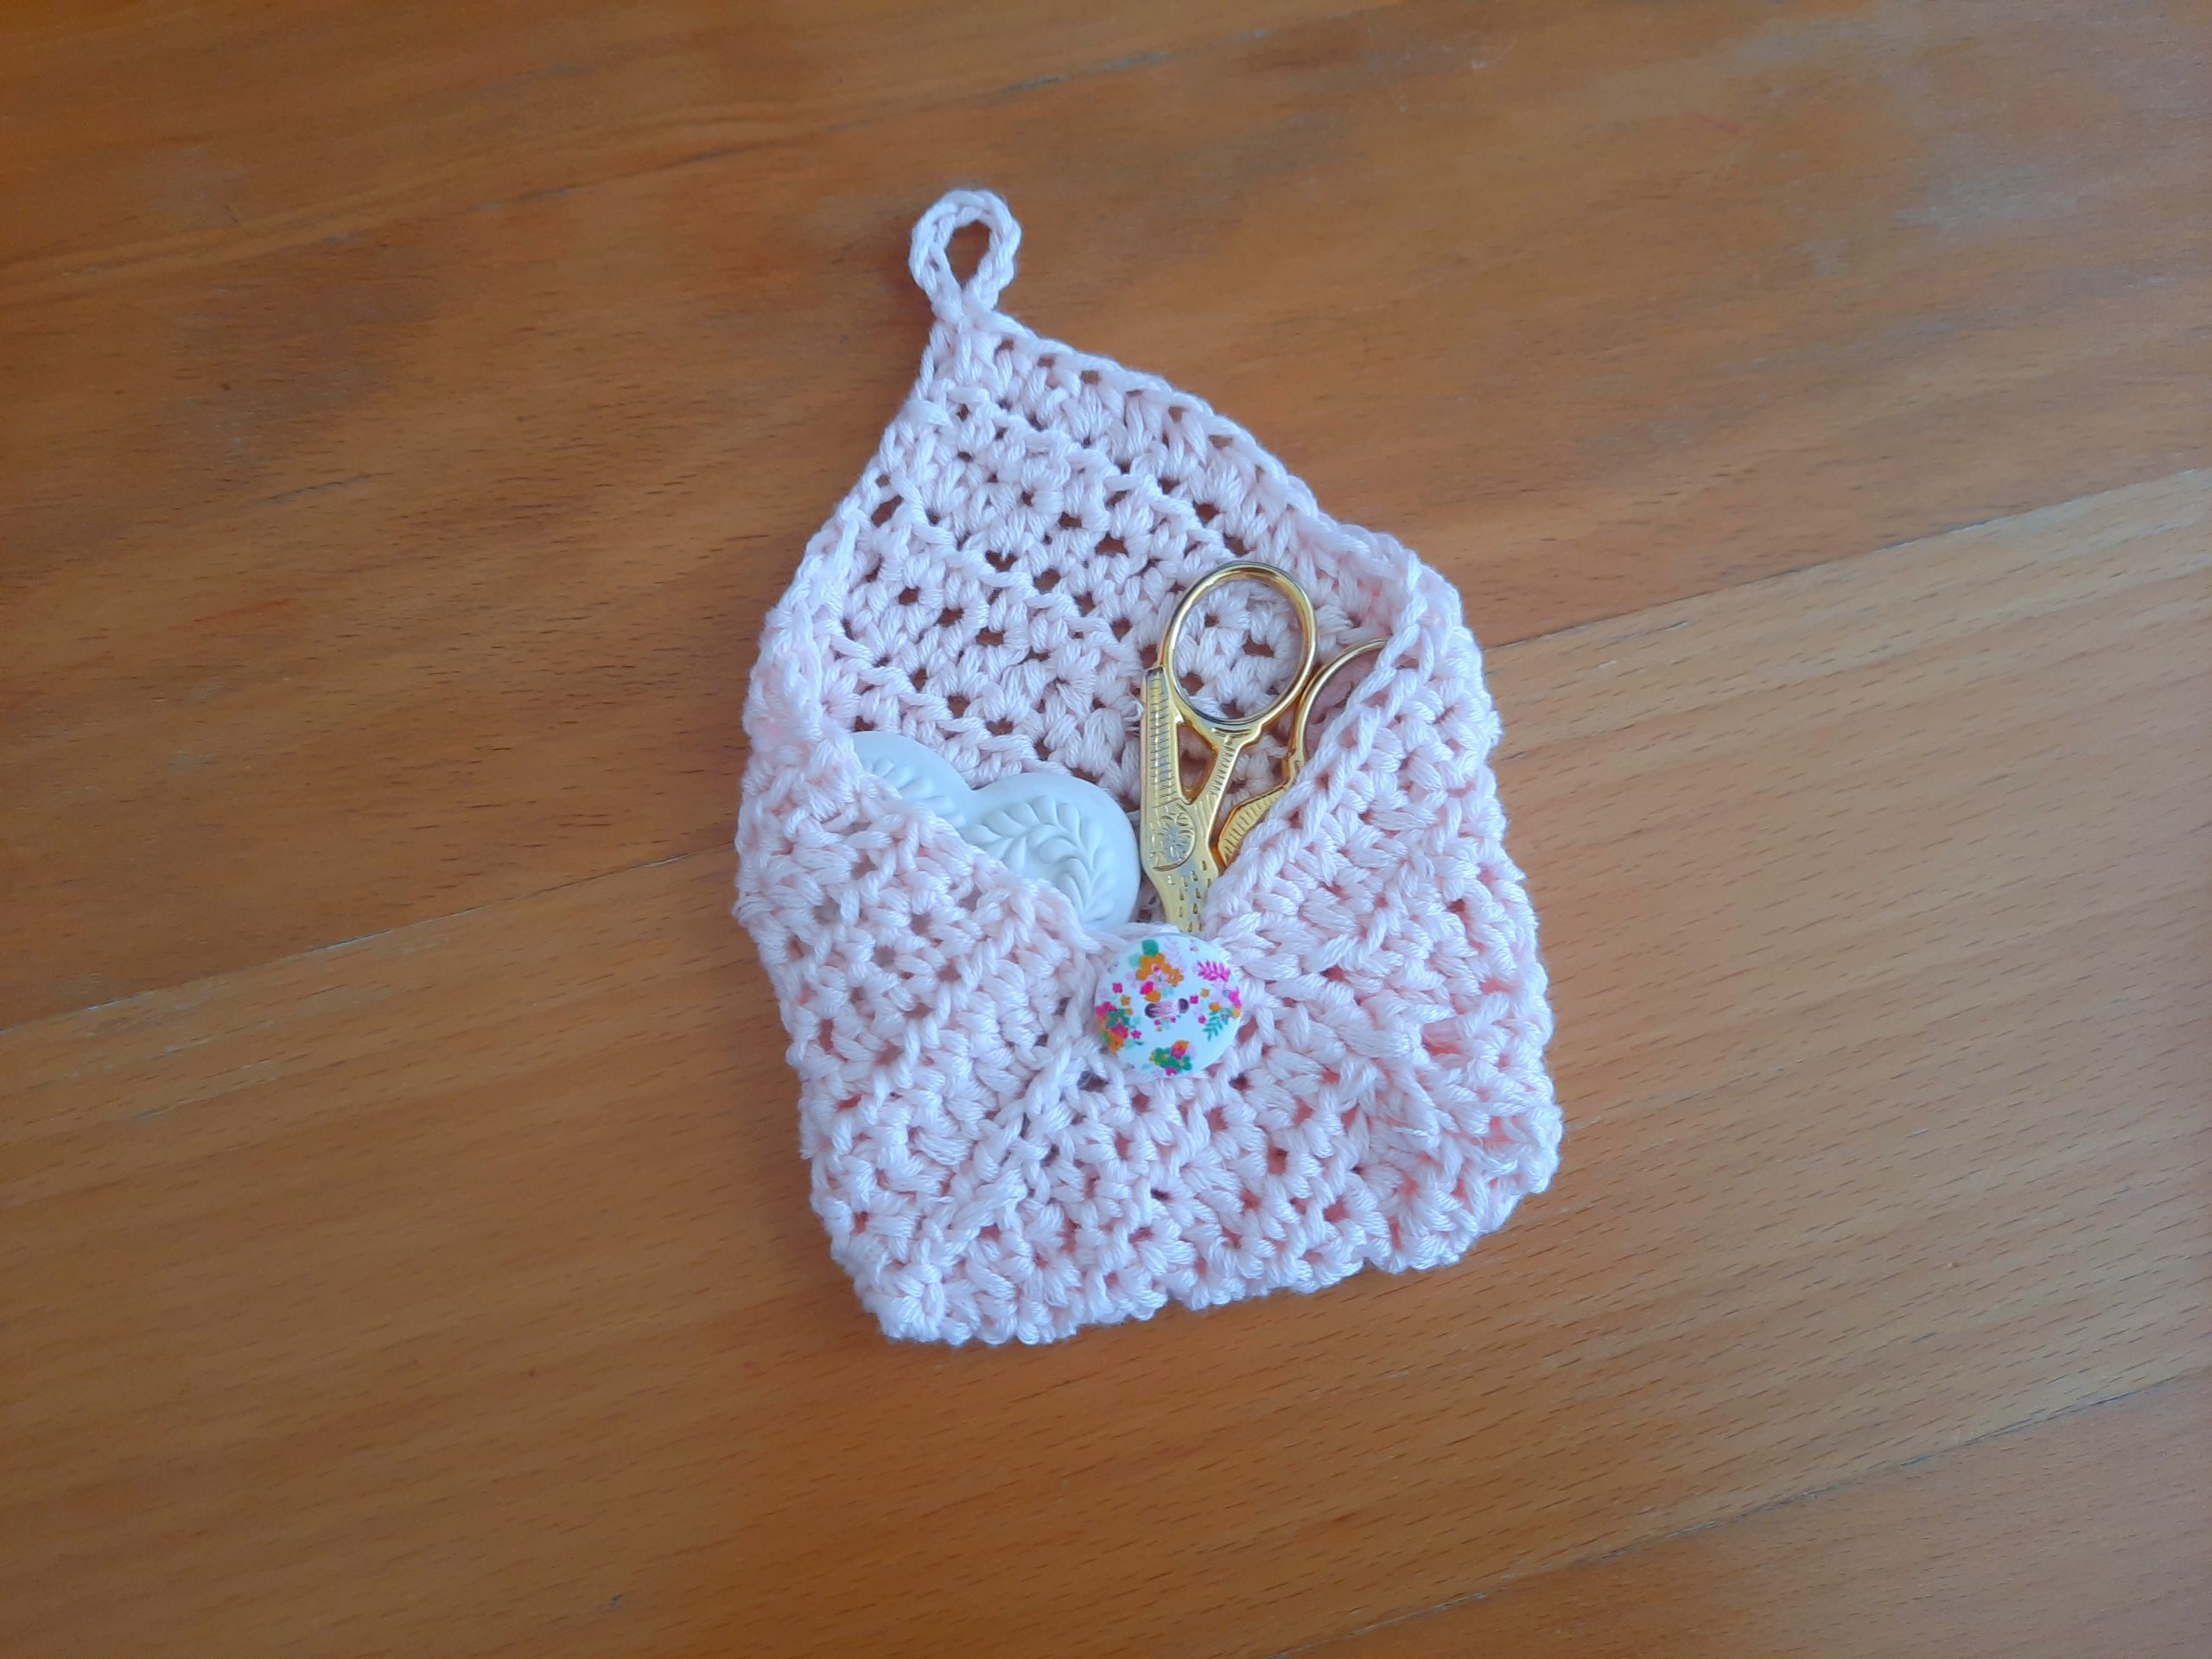 Handmade Hello Kitty Crochet Purse with 3 Kittens | eBay